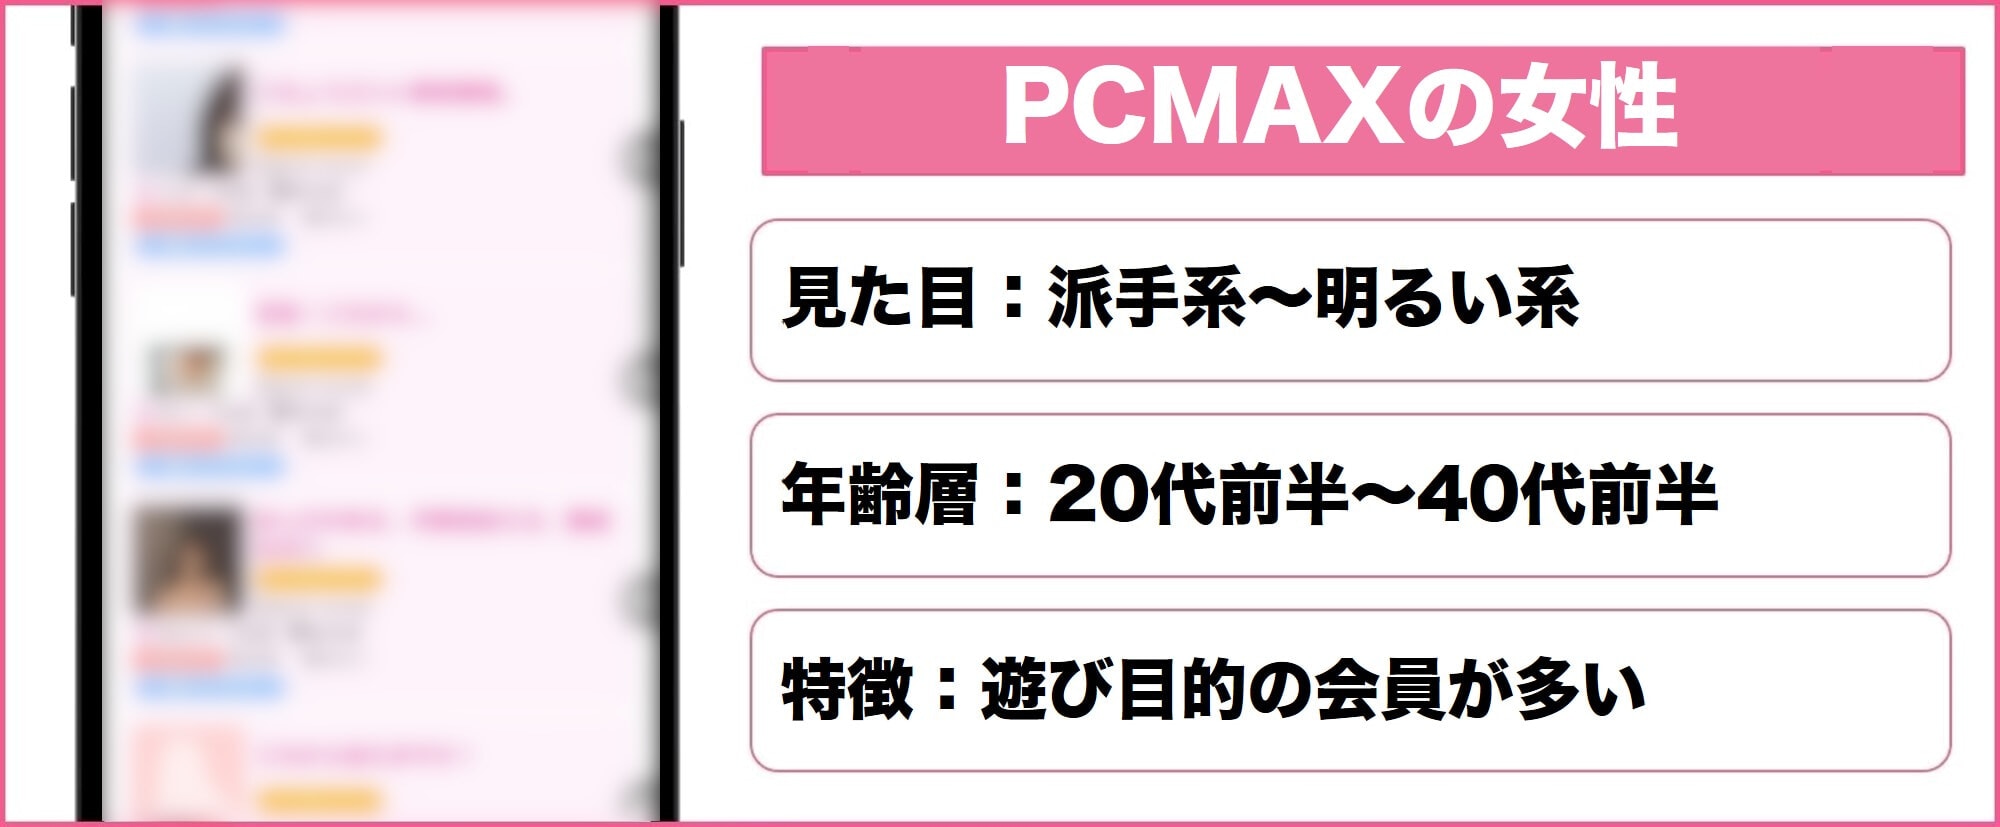 PCMAX 女性